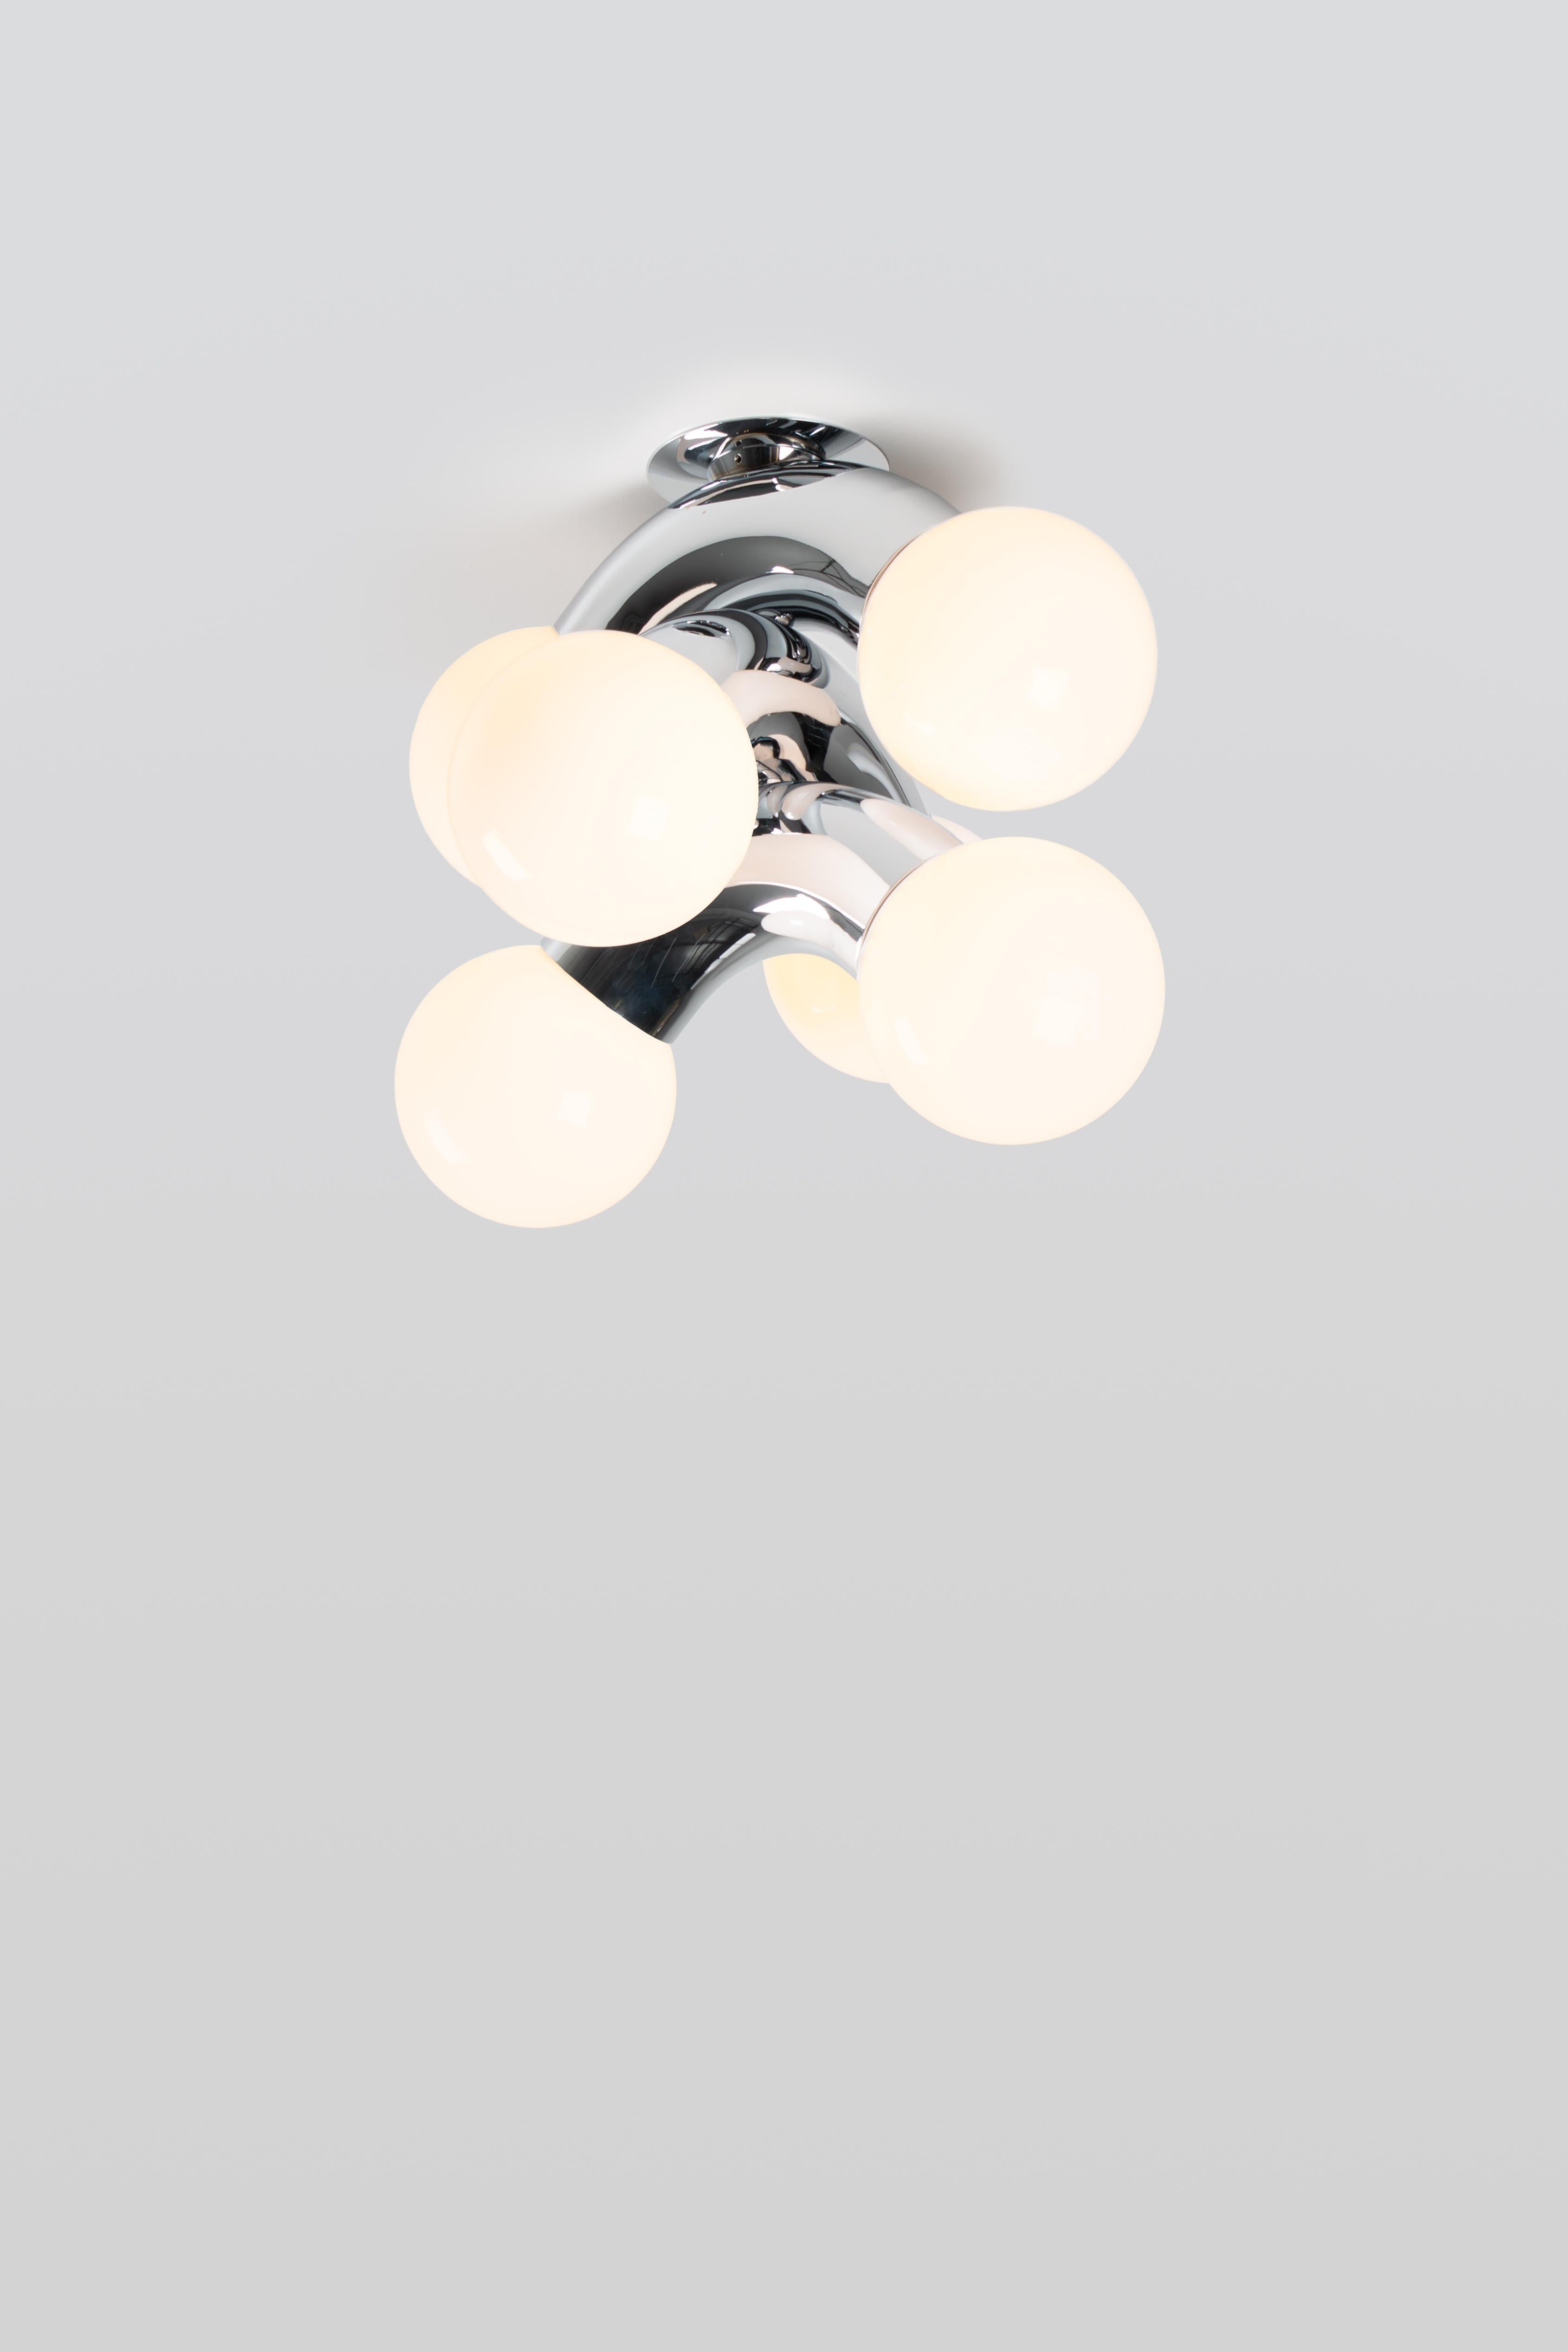 Organic Modern Contemporary Ceiling Lamp VINE 3-C, Chrome For Sale